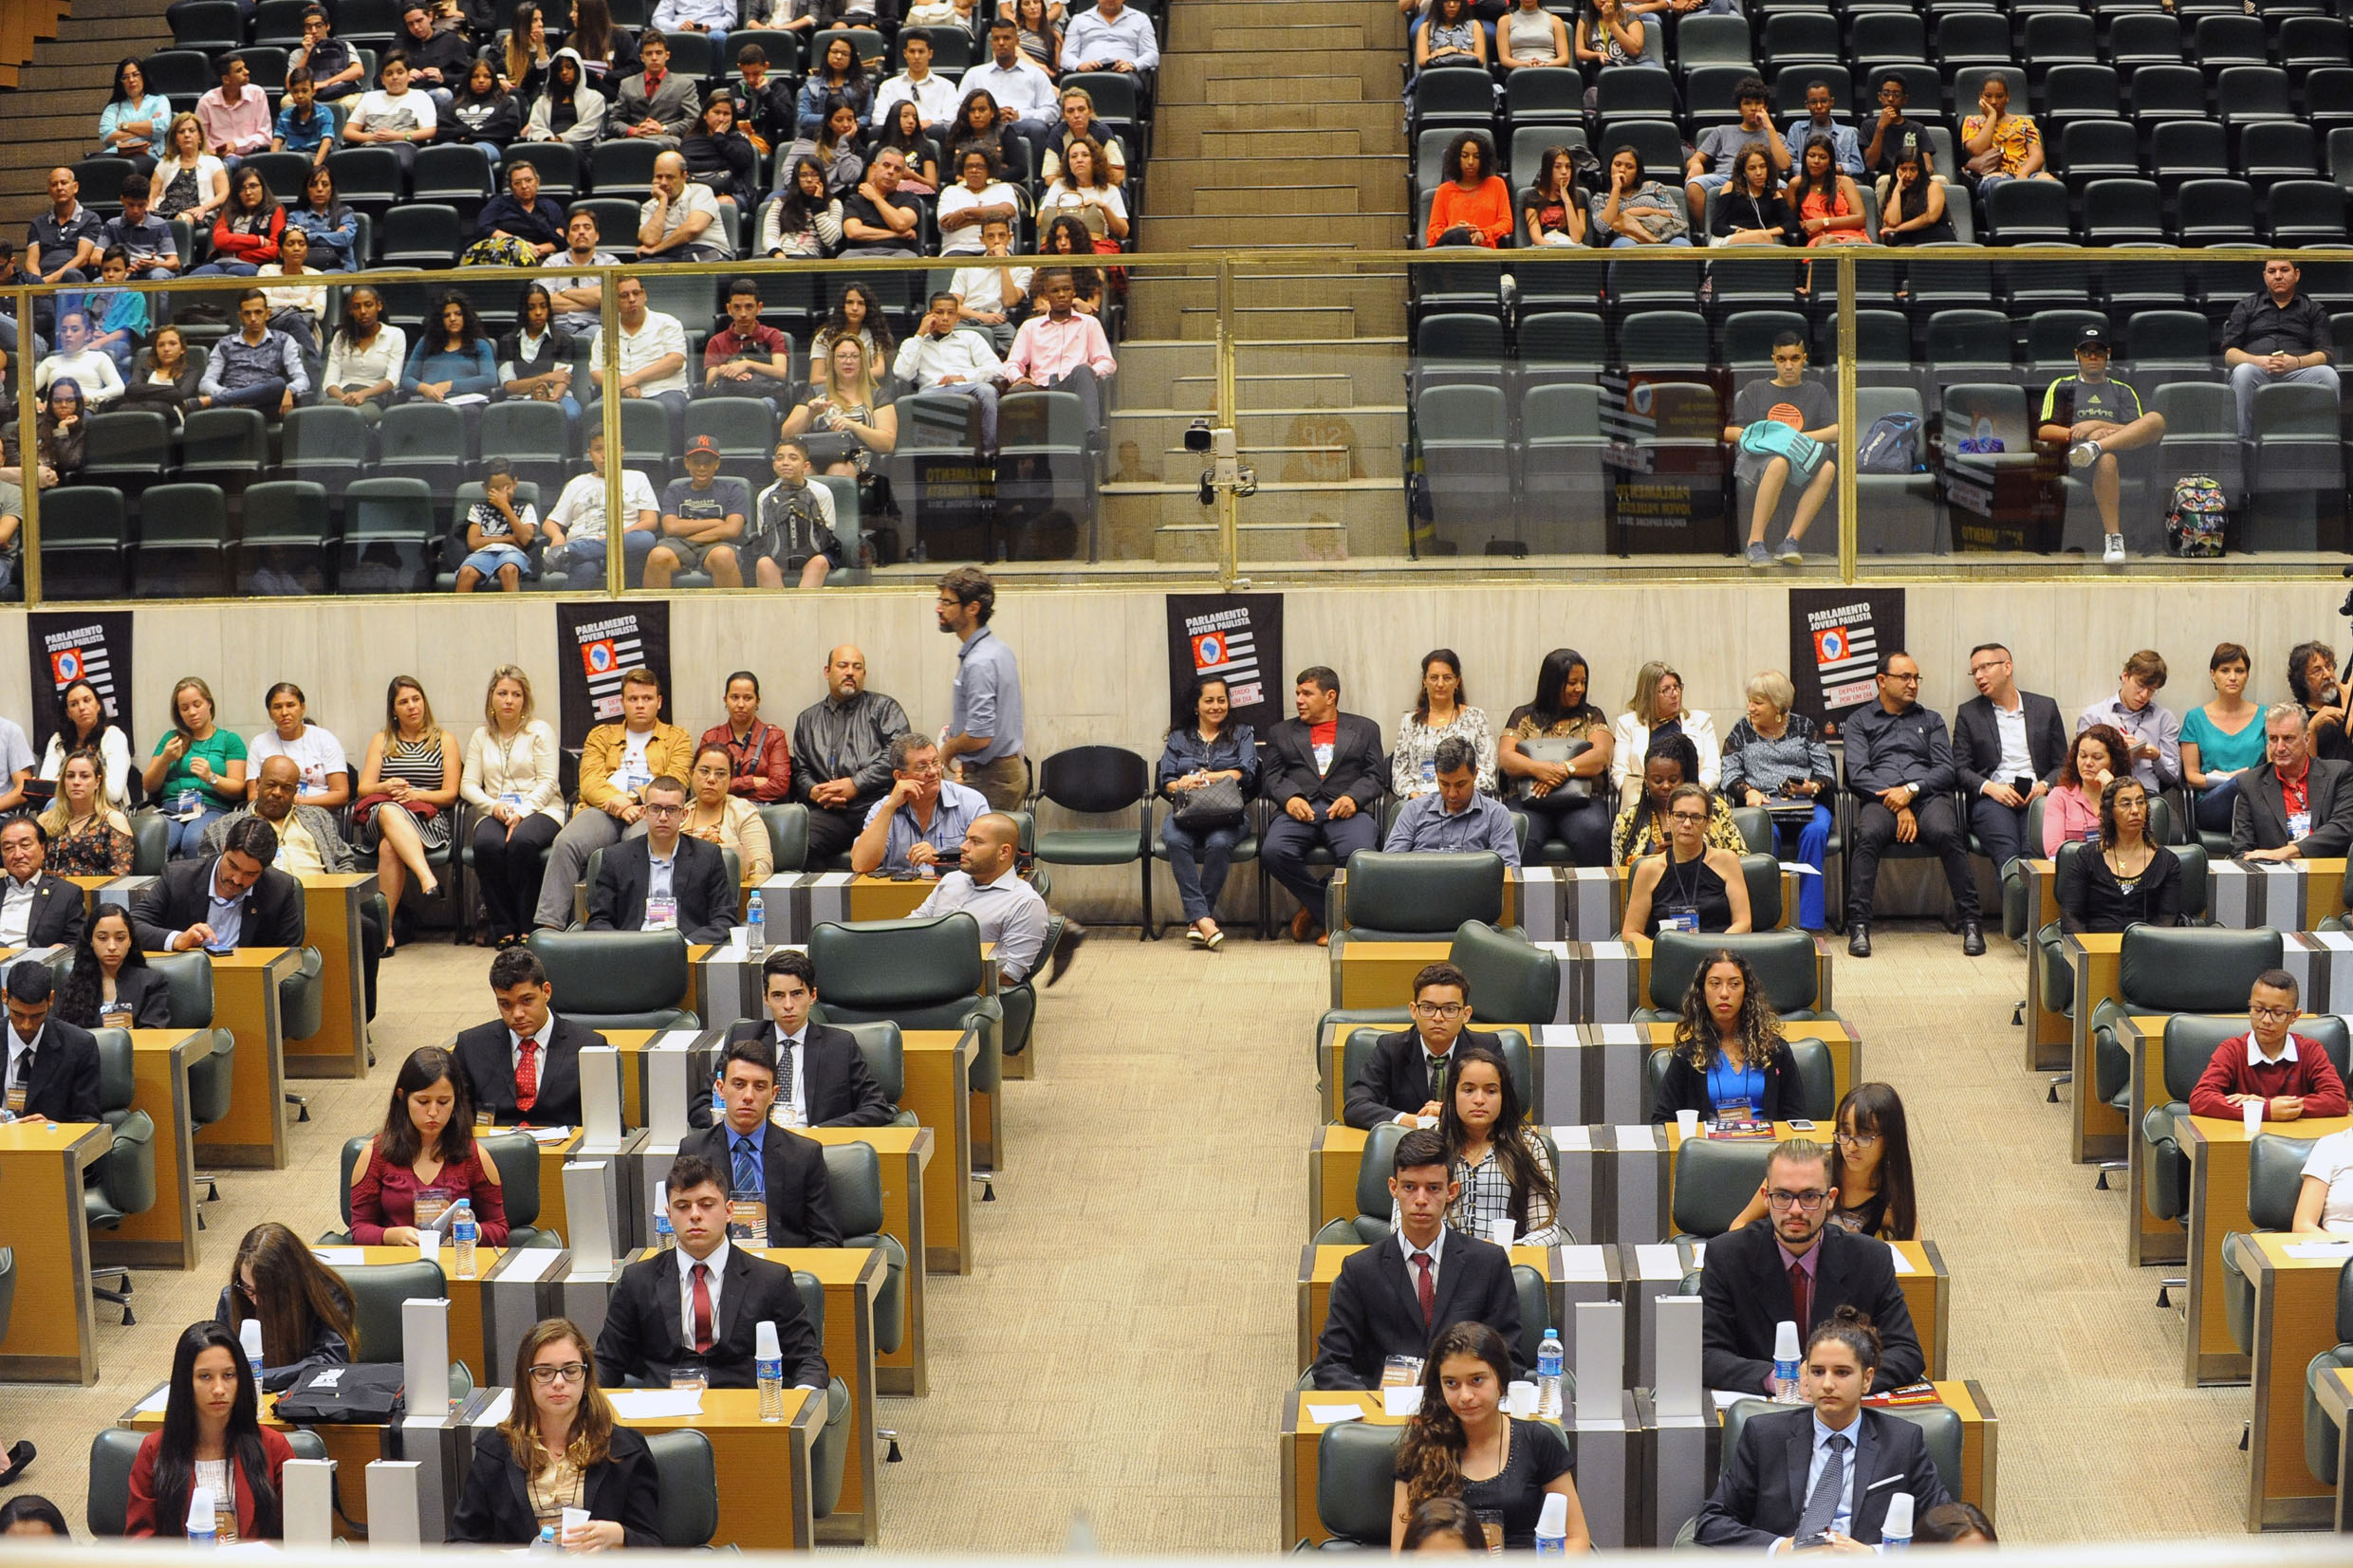 Parlamento Jovem Paulista <a style='float:right;color:#ccc' href='https://www3.al.sp.gov.br/repositorio/noticia/N-04-2018/fg222129.jpg' target=_blank><i class='bi bi-zoom-in'></i> Clique para ver a imagem </a>